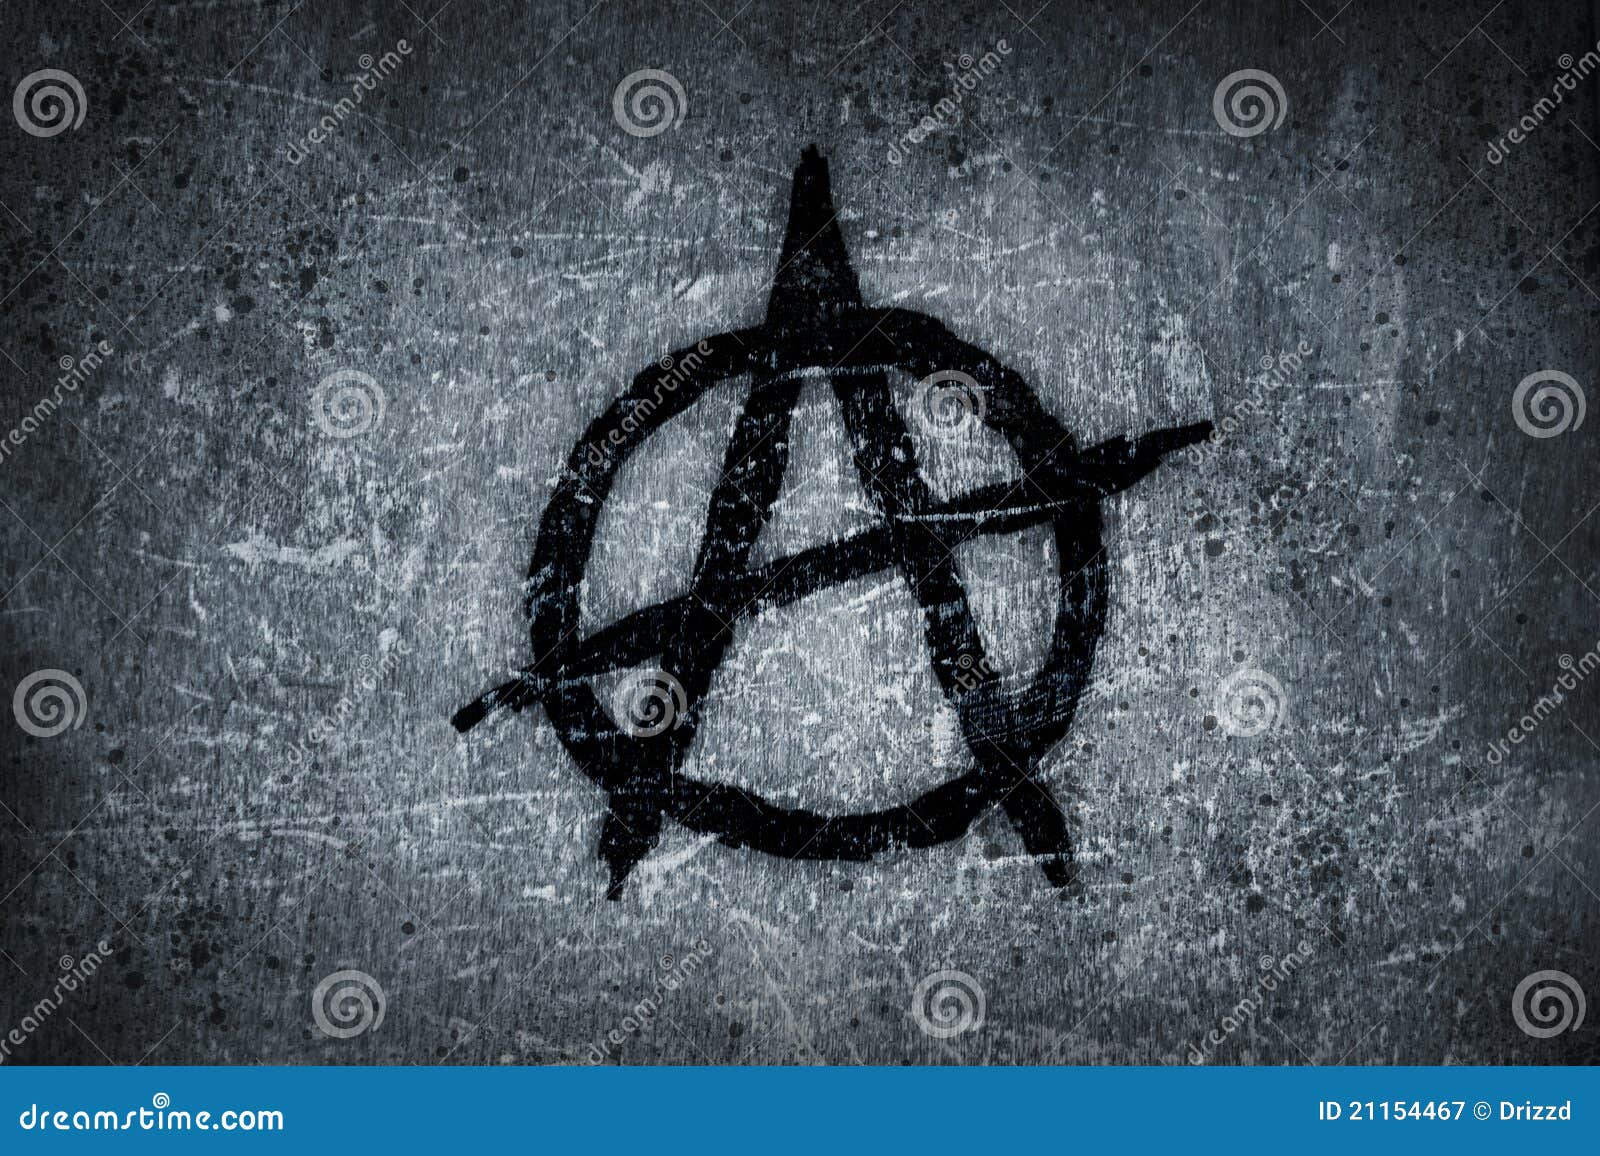 anarchy  on wall